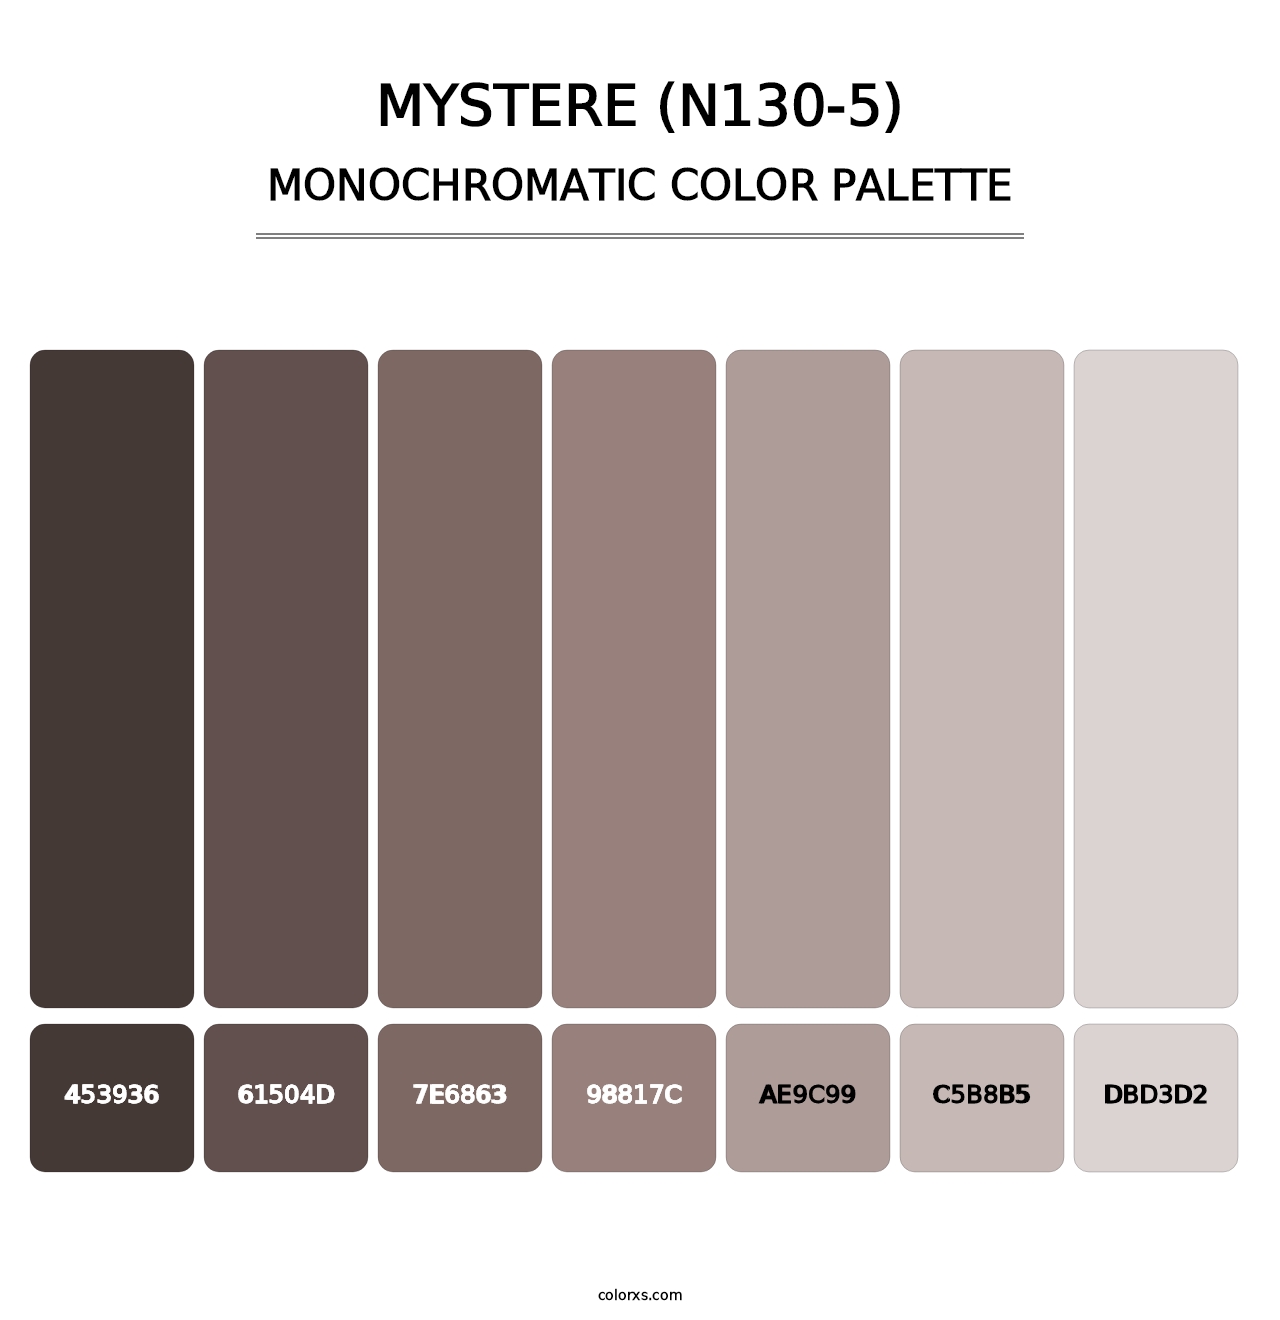 Mystere (N130-5) - Monochromatic Color Palette